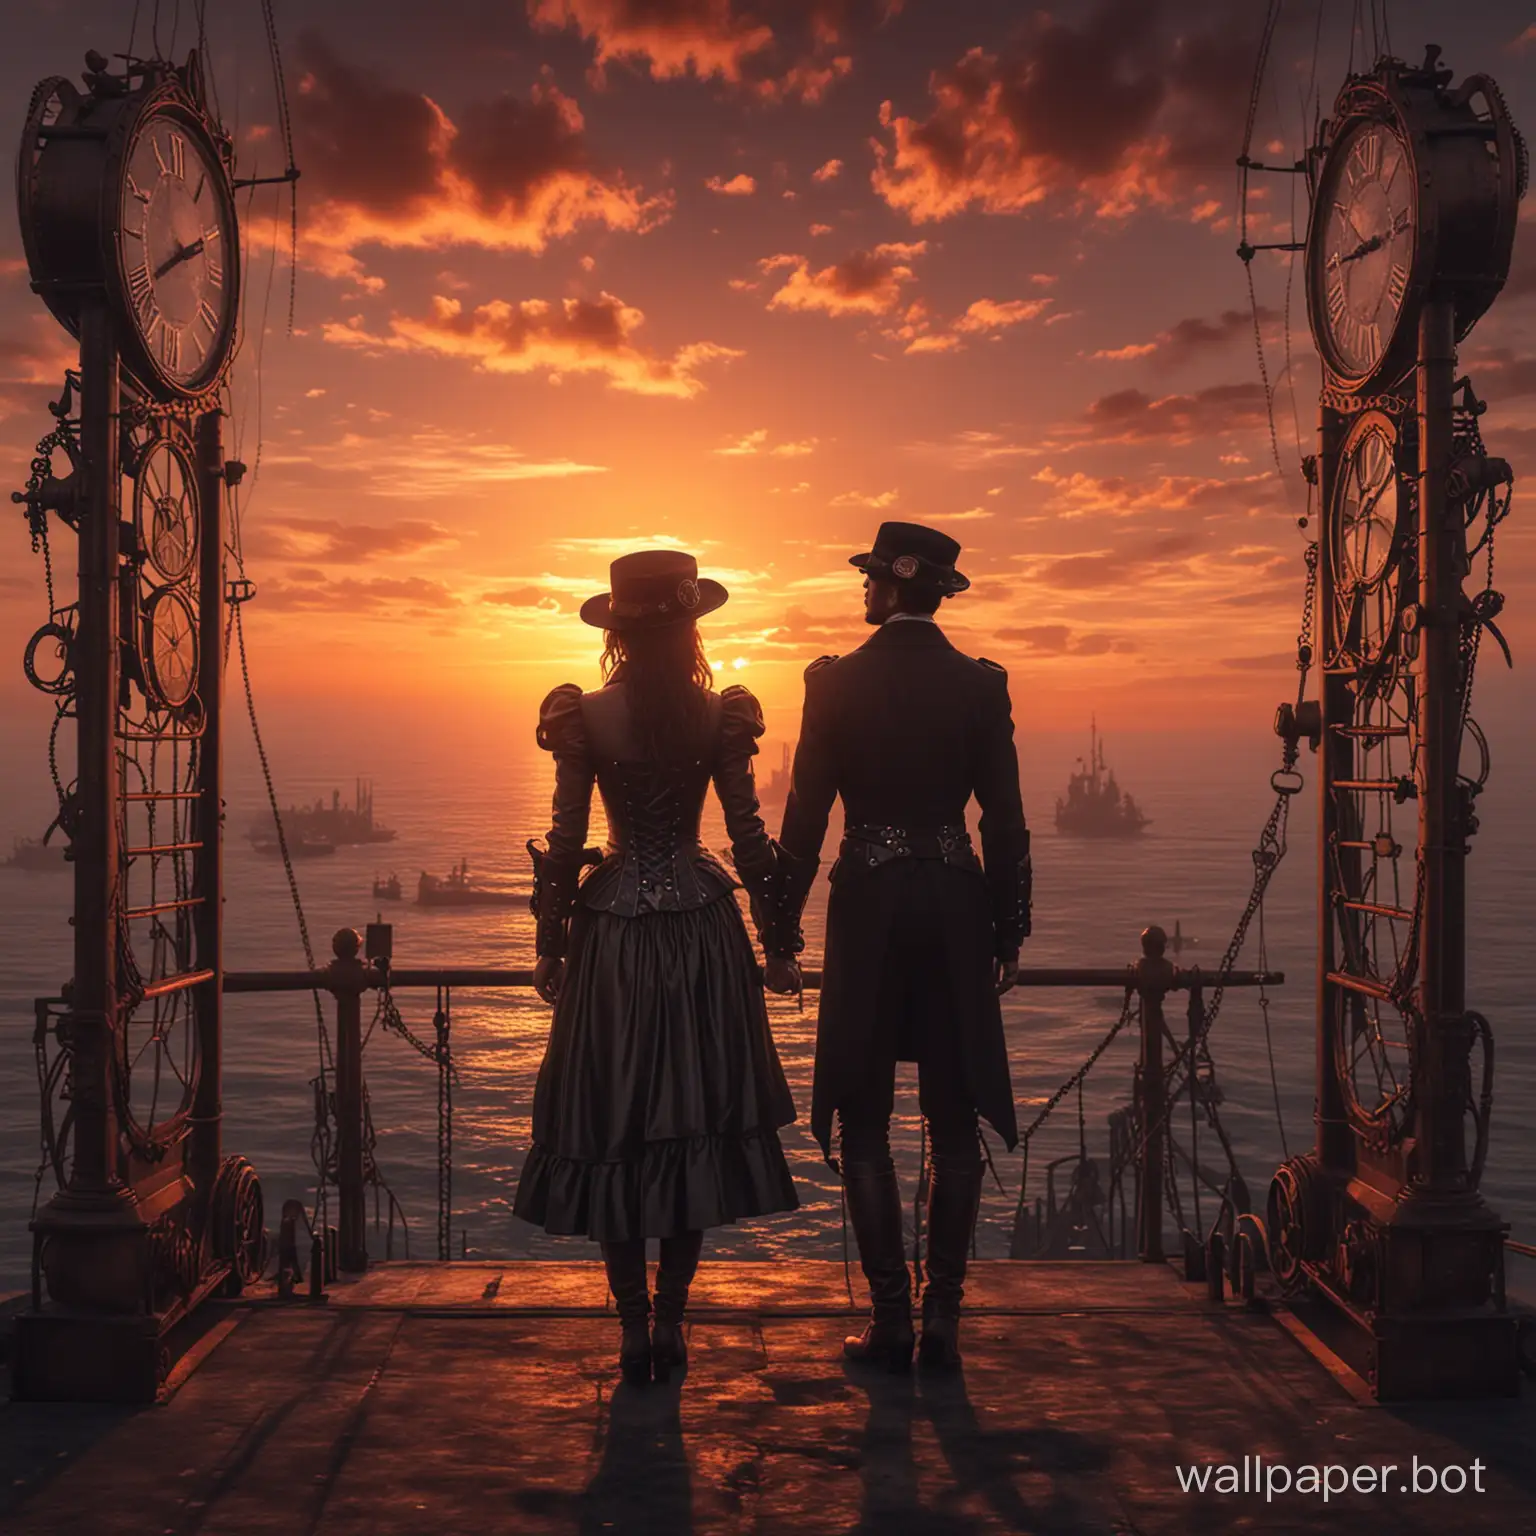 Ethereal-Steampunk-Sunset-Romance